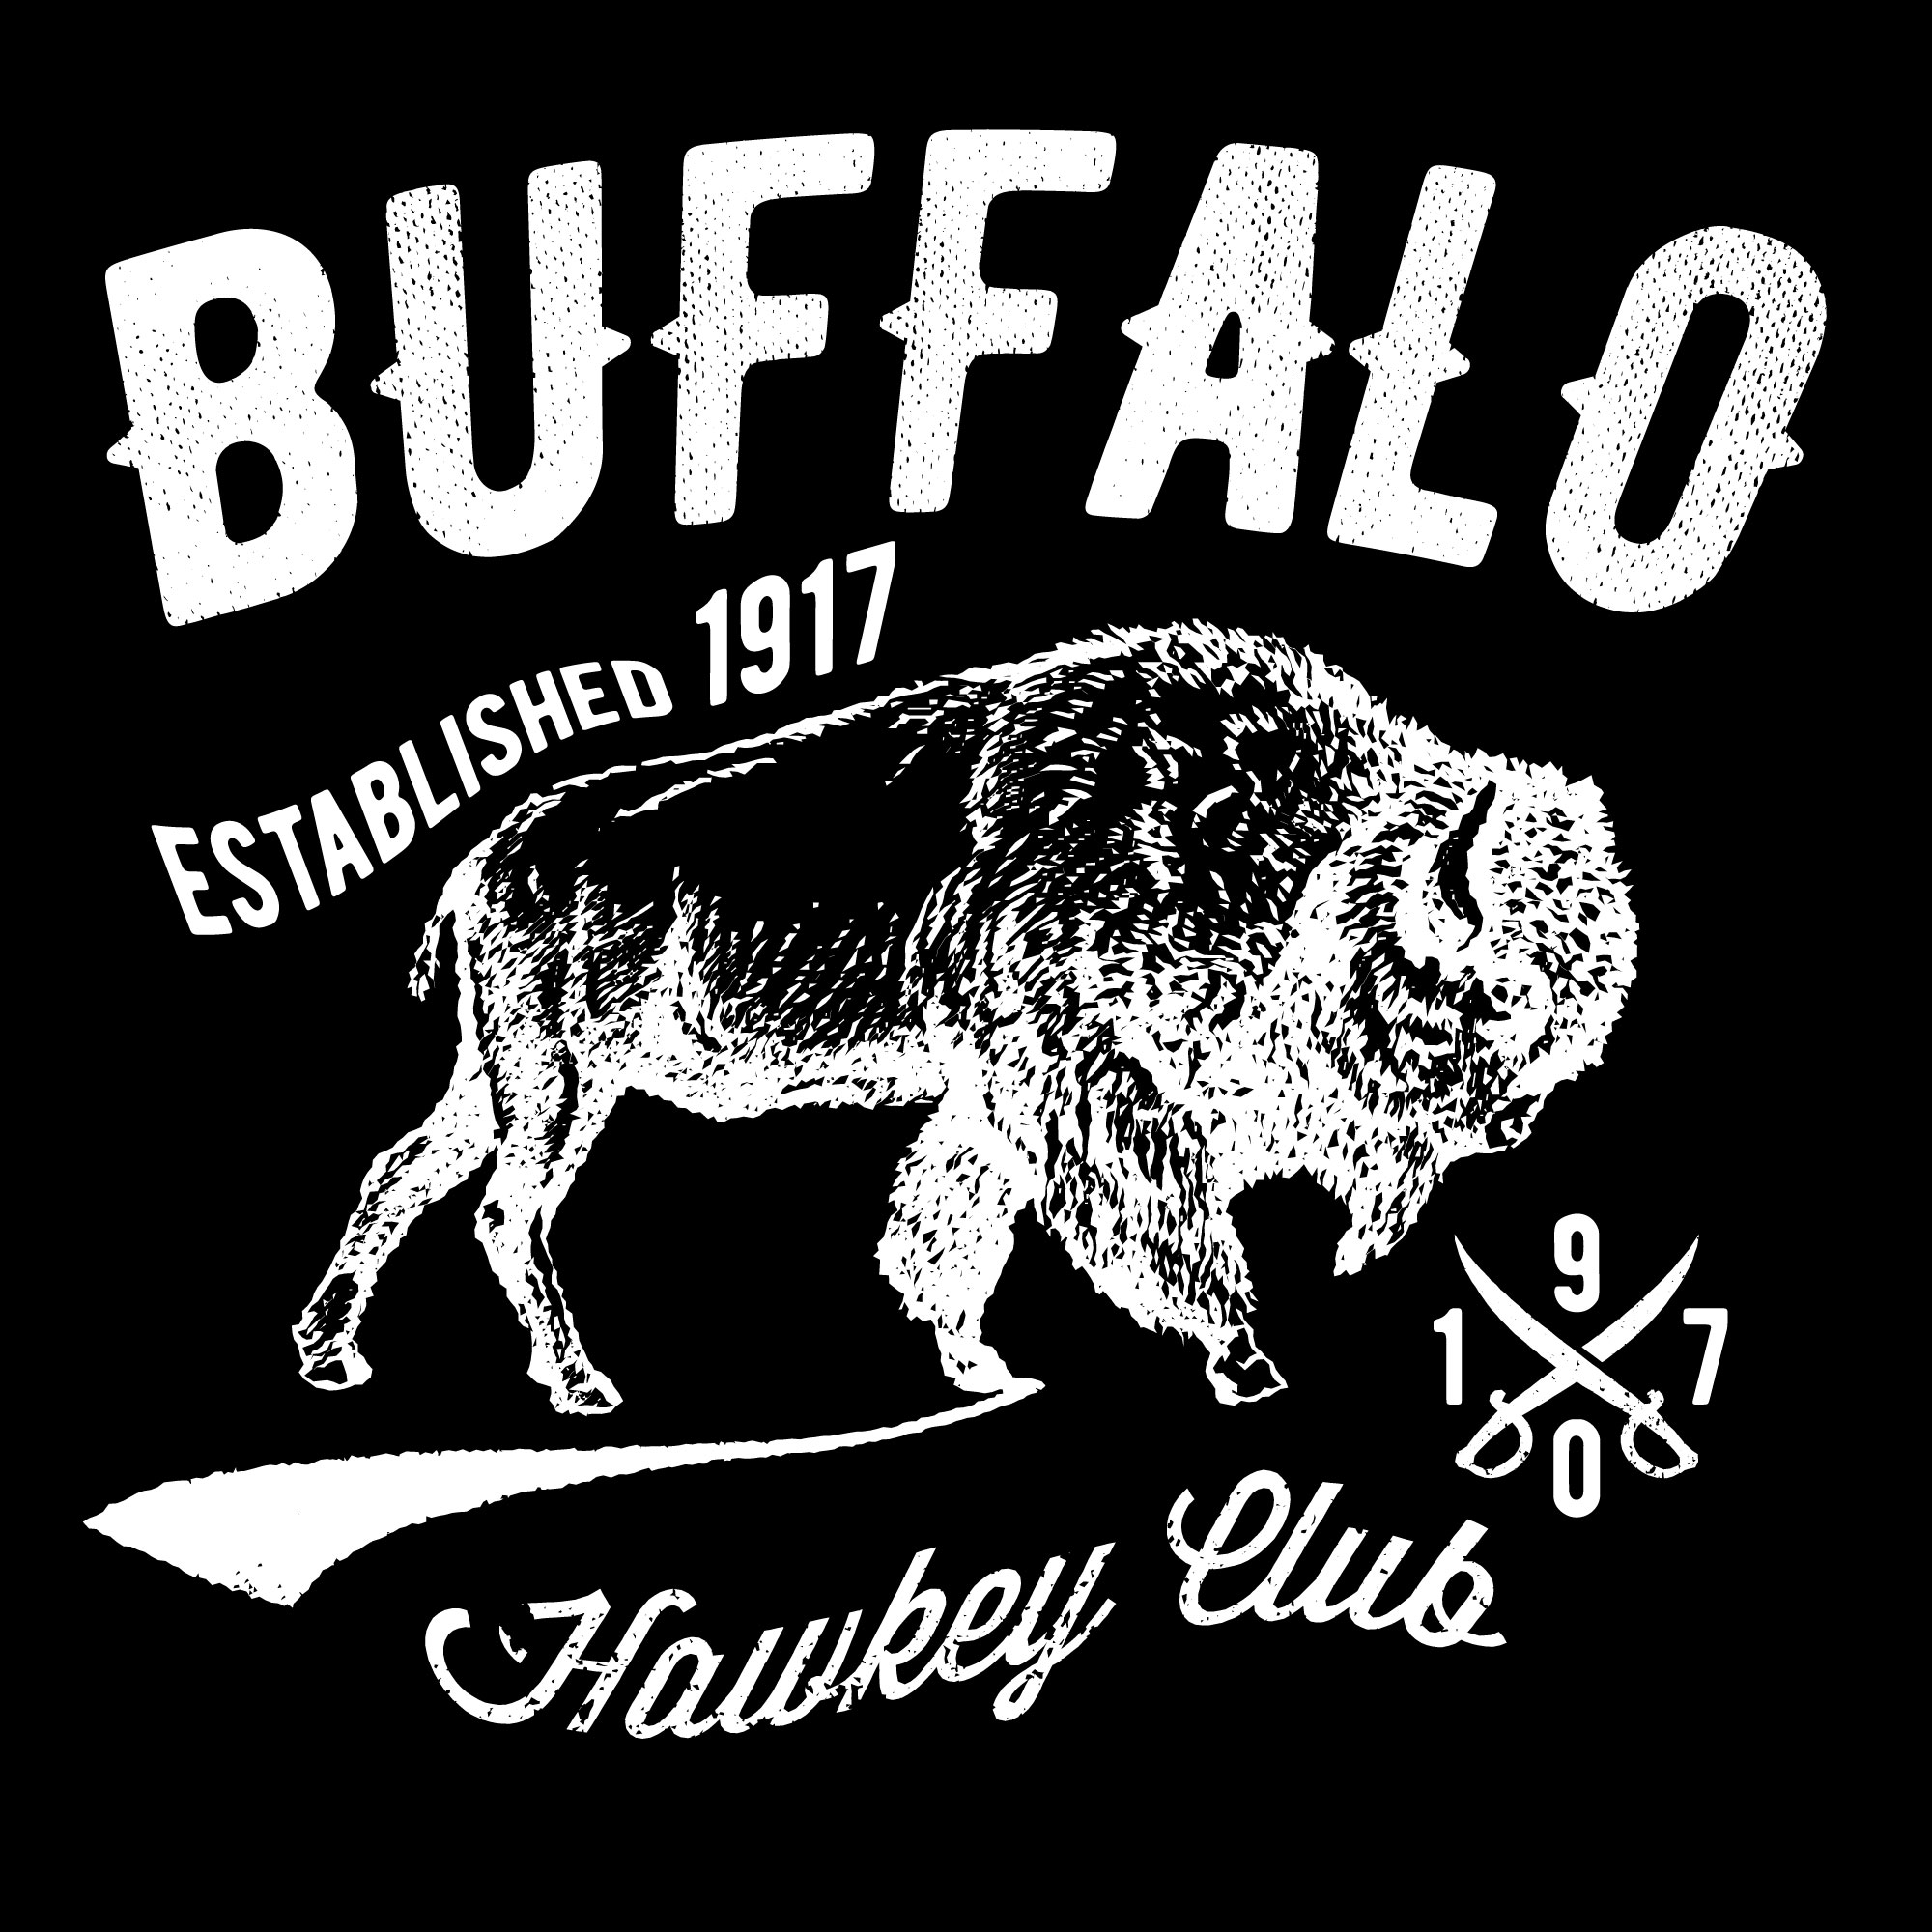 Buffalo Hockey by Christopher Cavanaugh on Dribbble